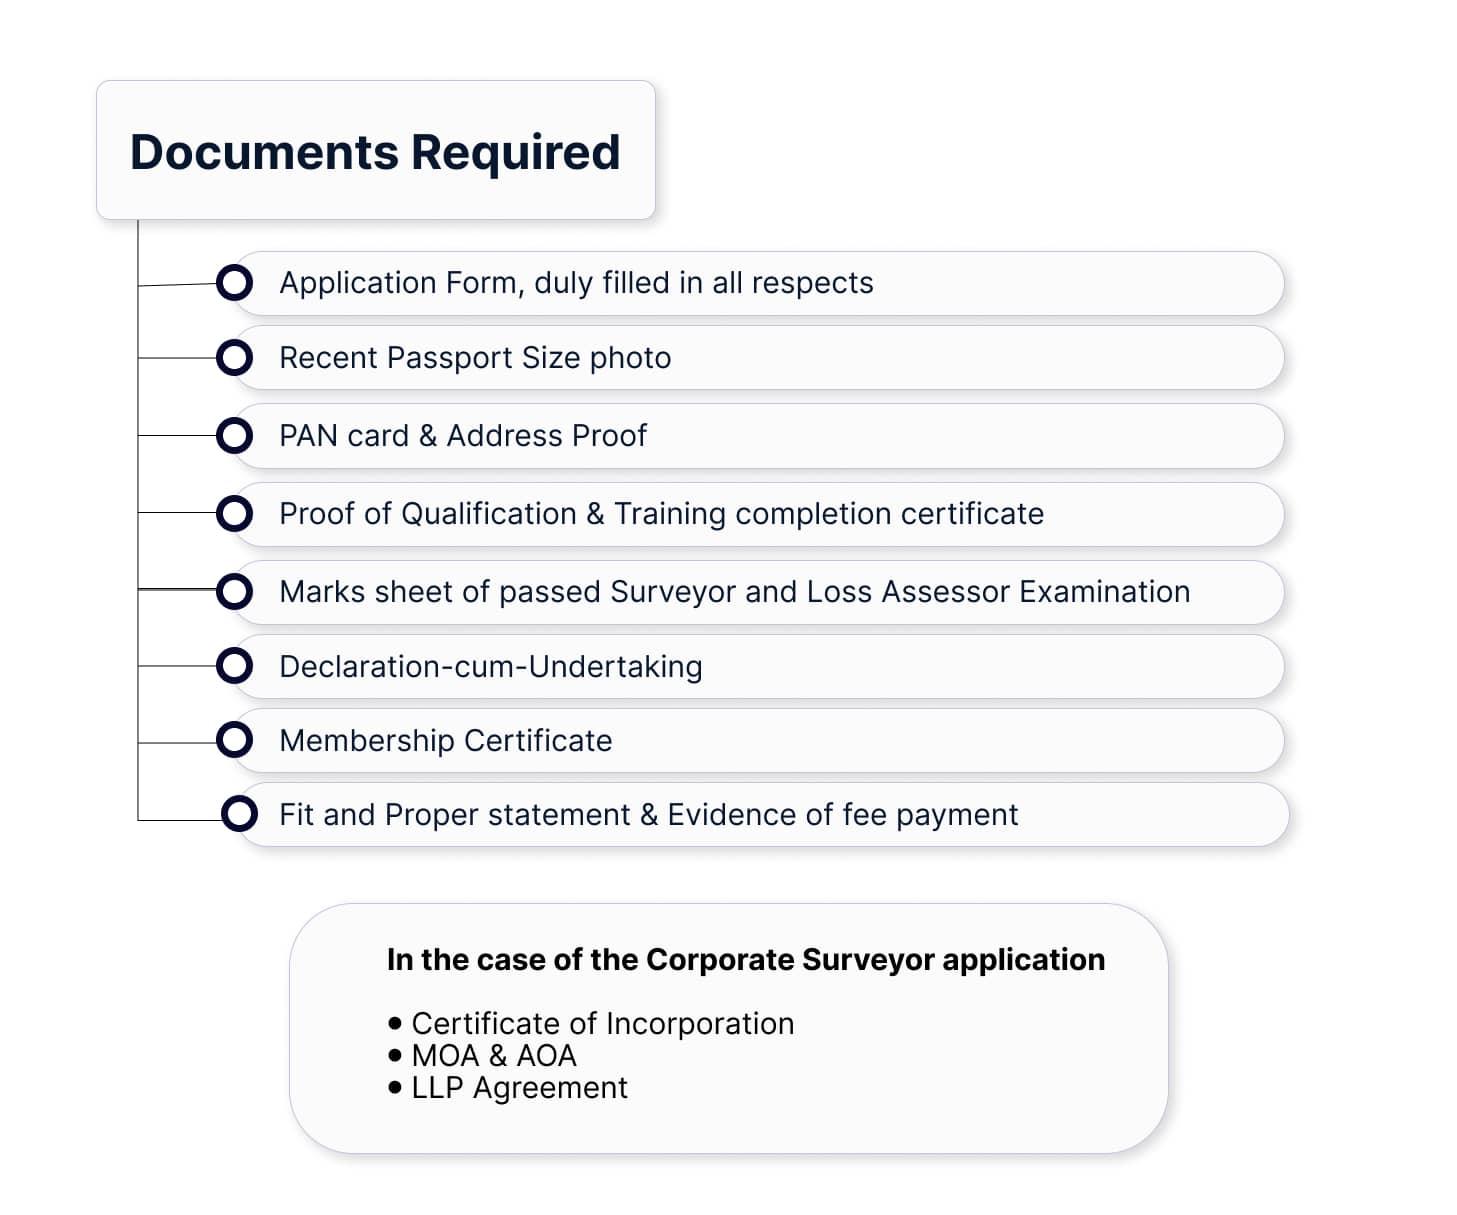 Documentation required for insurance surveyor registration